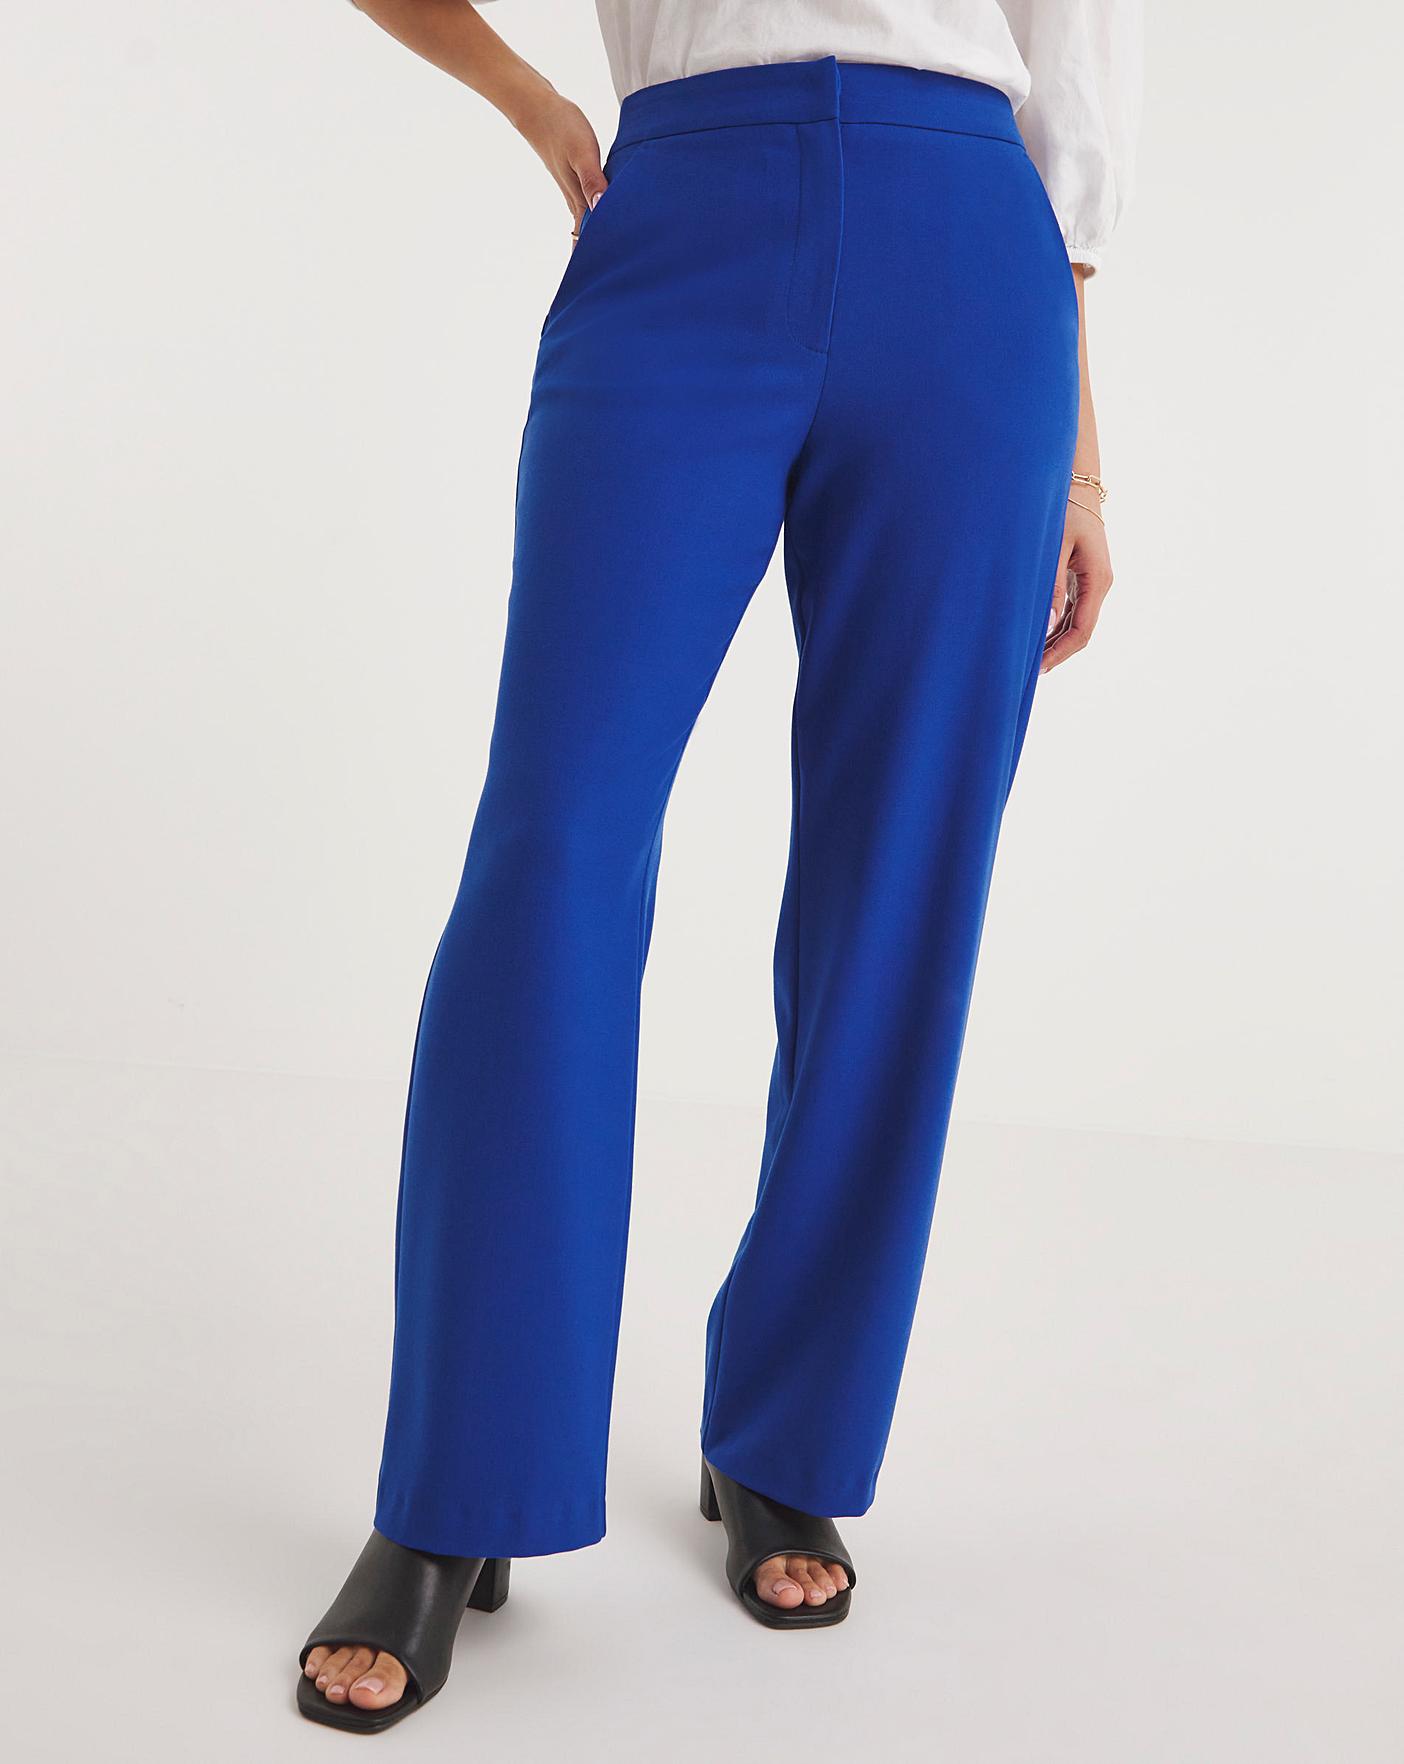 Get Elasticated Waist Straight Blue Pants at ₹ 770 | LBB Shop